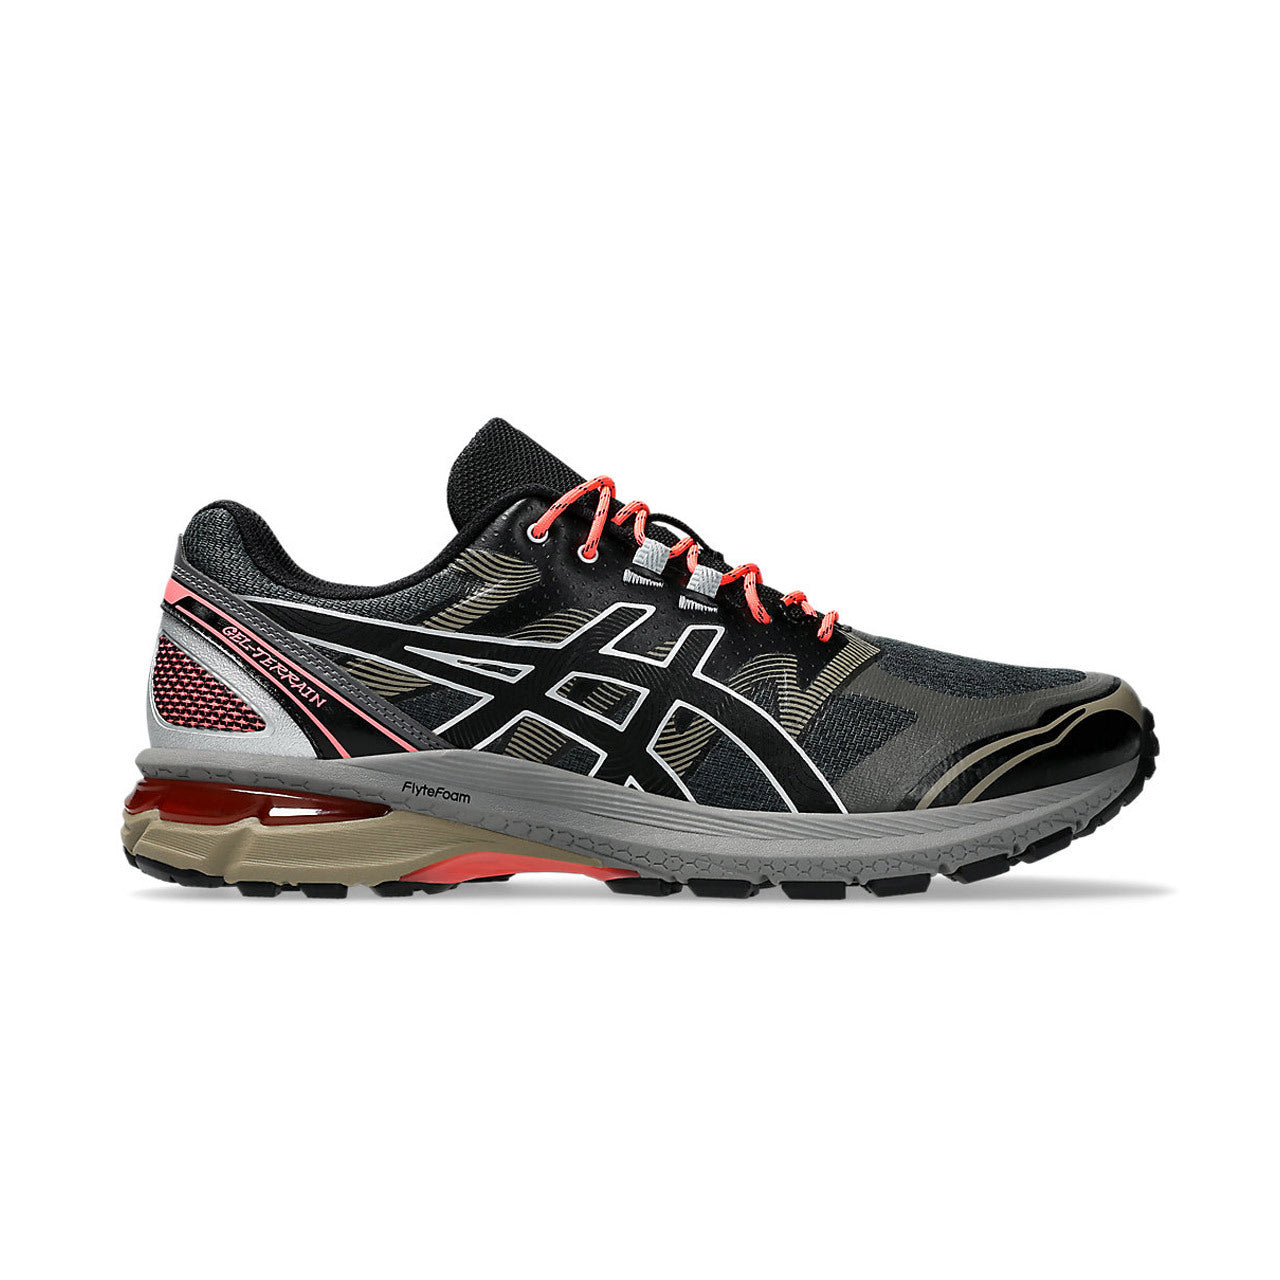 ASICS Gel-Terrain Graphite Black Trail Shoes, #ASICS #GelTerrain #Graphite #Black #Trail #Shoes